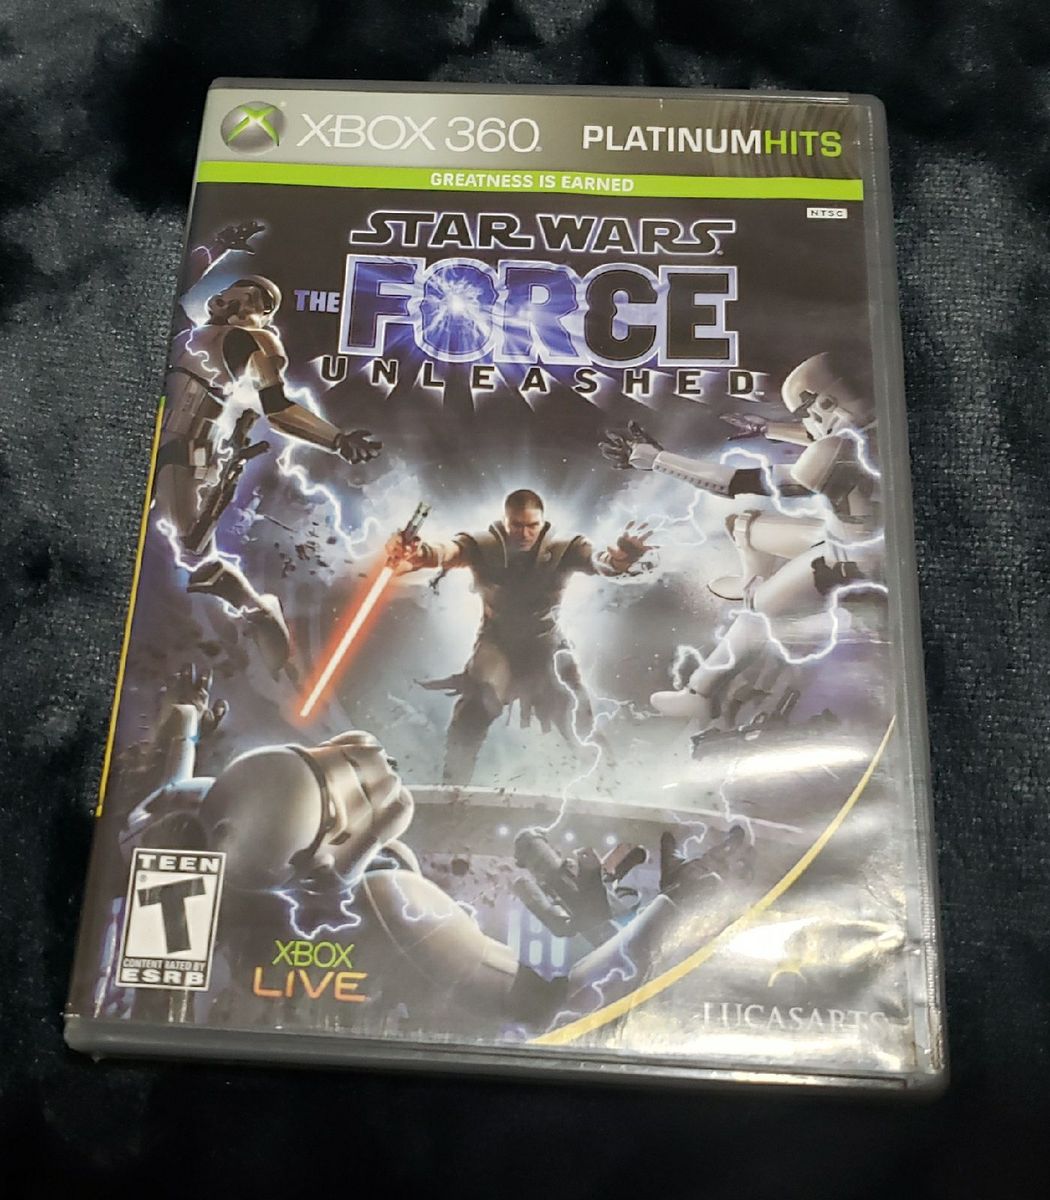 Star Wars: The Force Unleashed - Xbox 360 em Promoção na Americanas